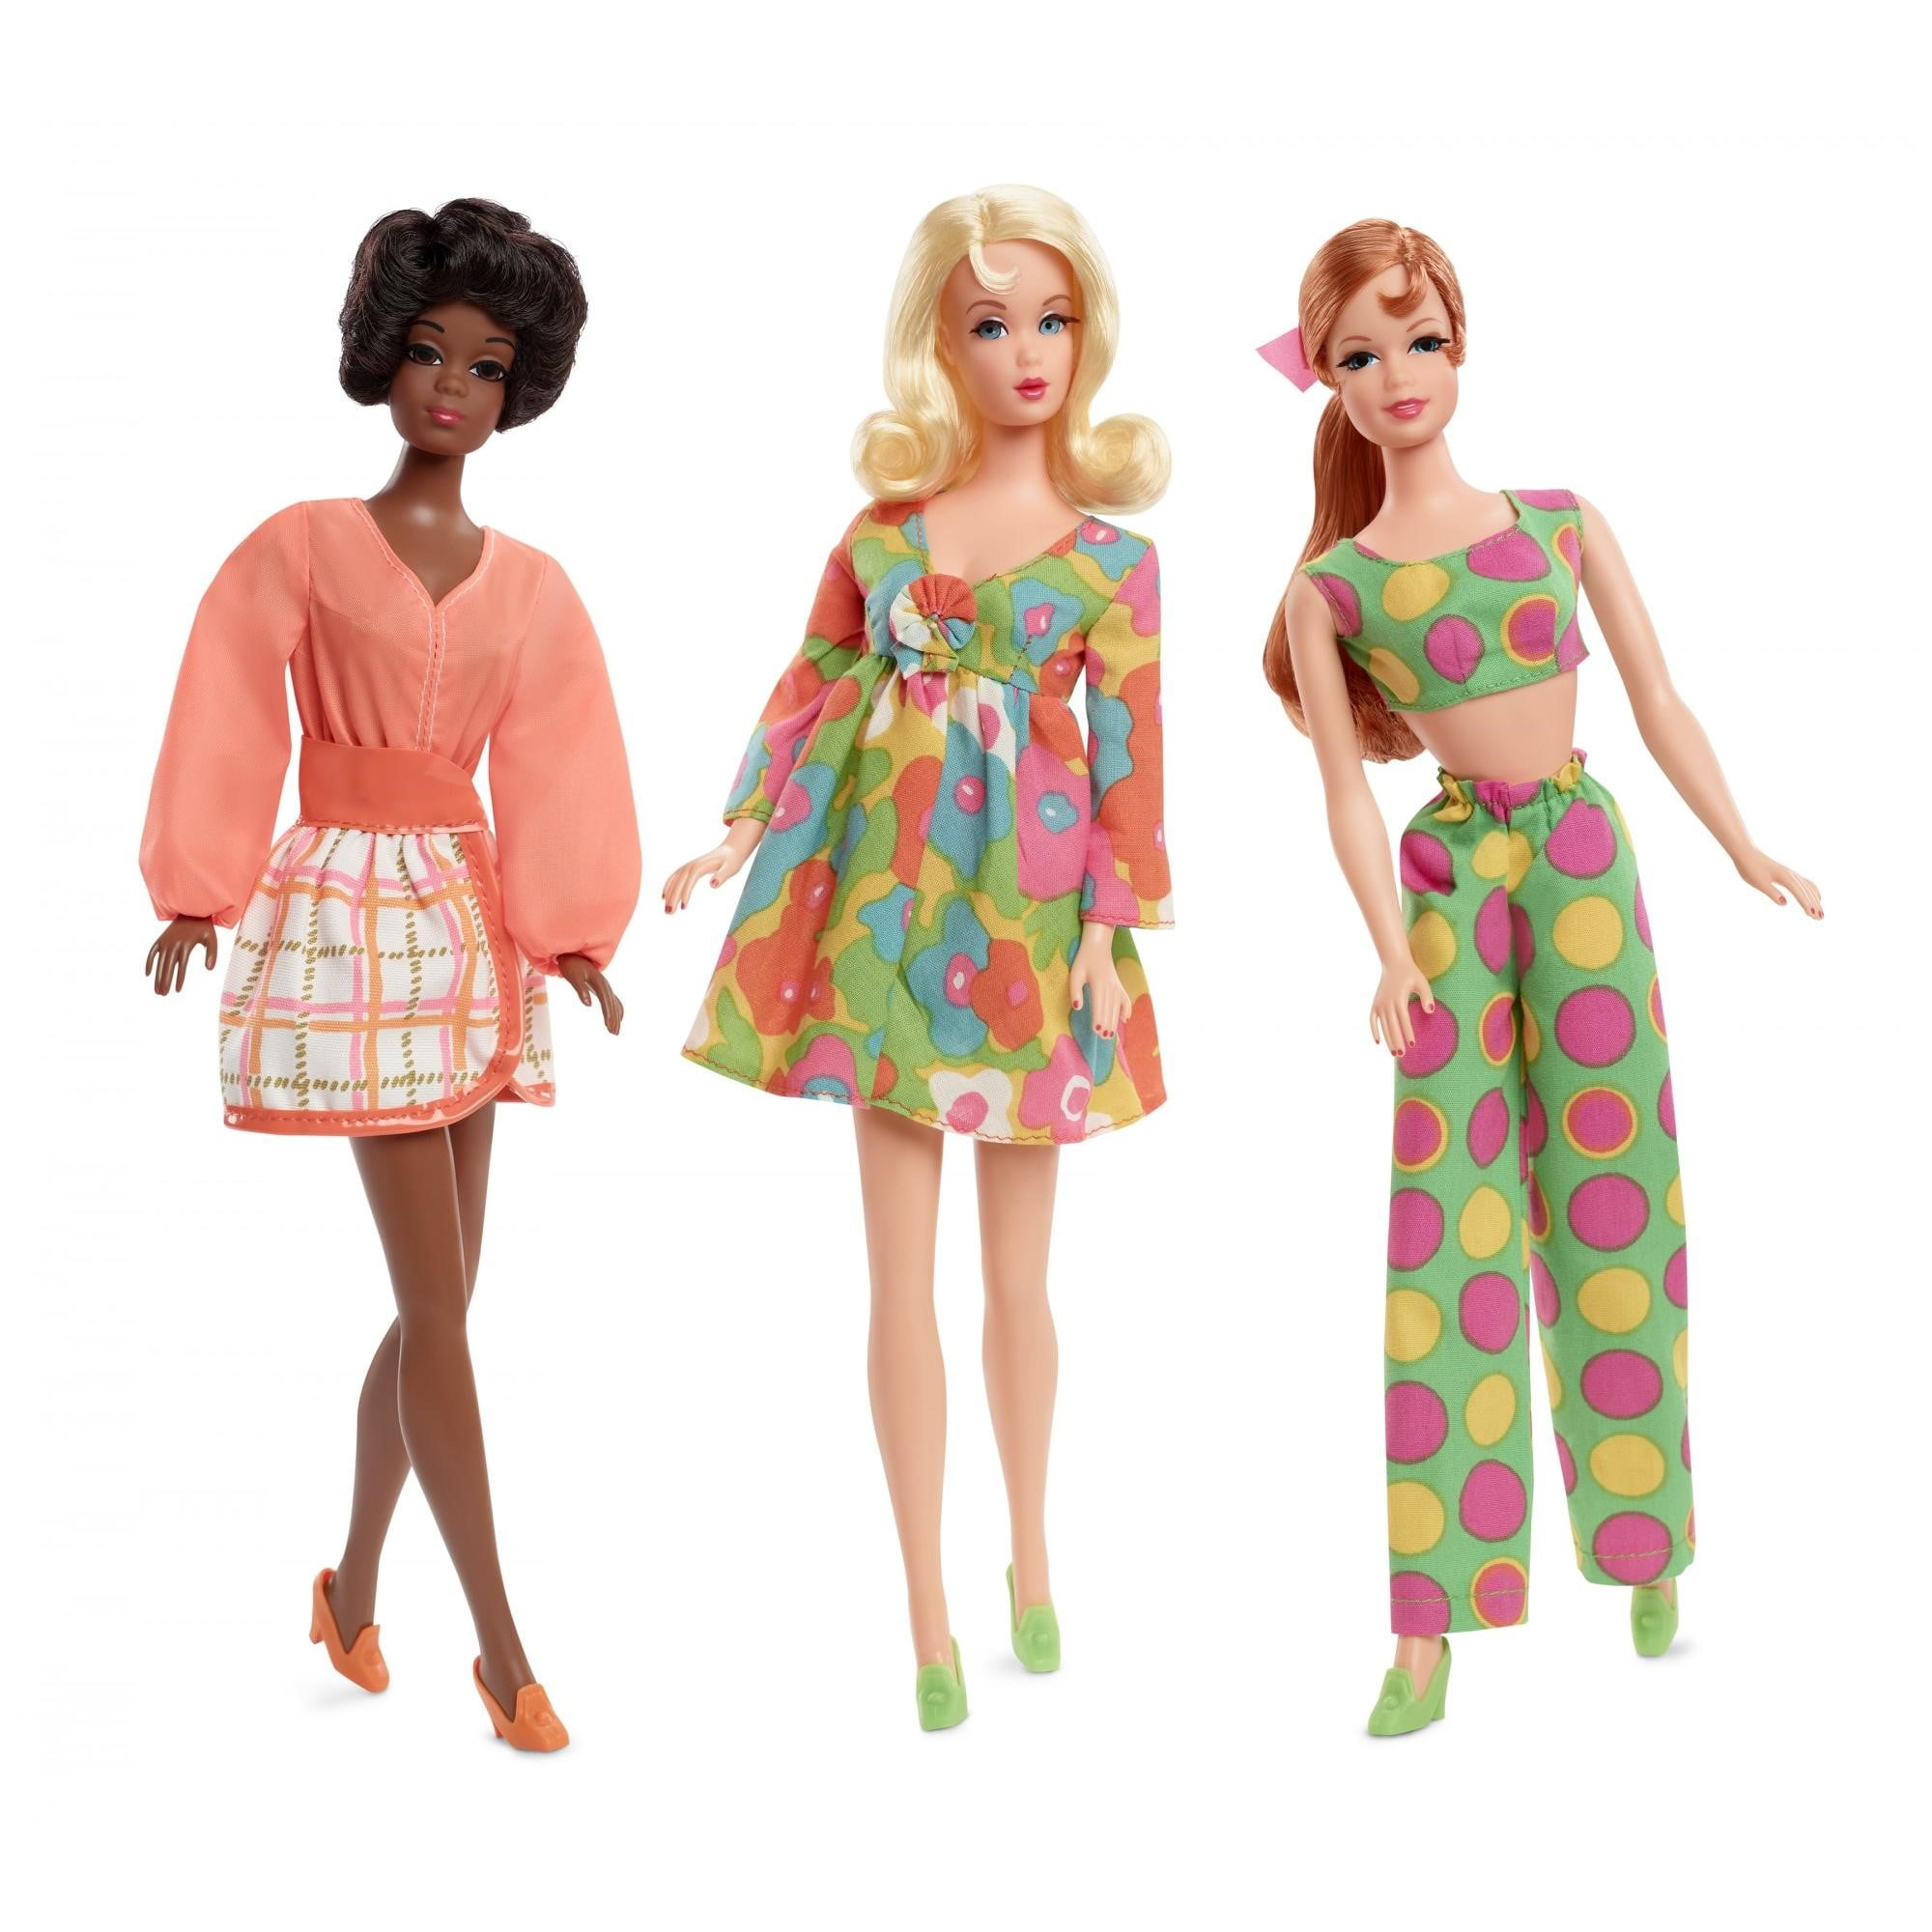 Barbie Mod Friends Gift Set with 3 Dolls in Retro Looks - Walmart.com